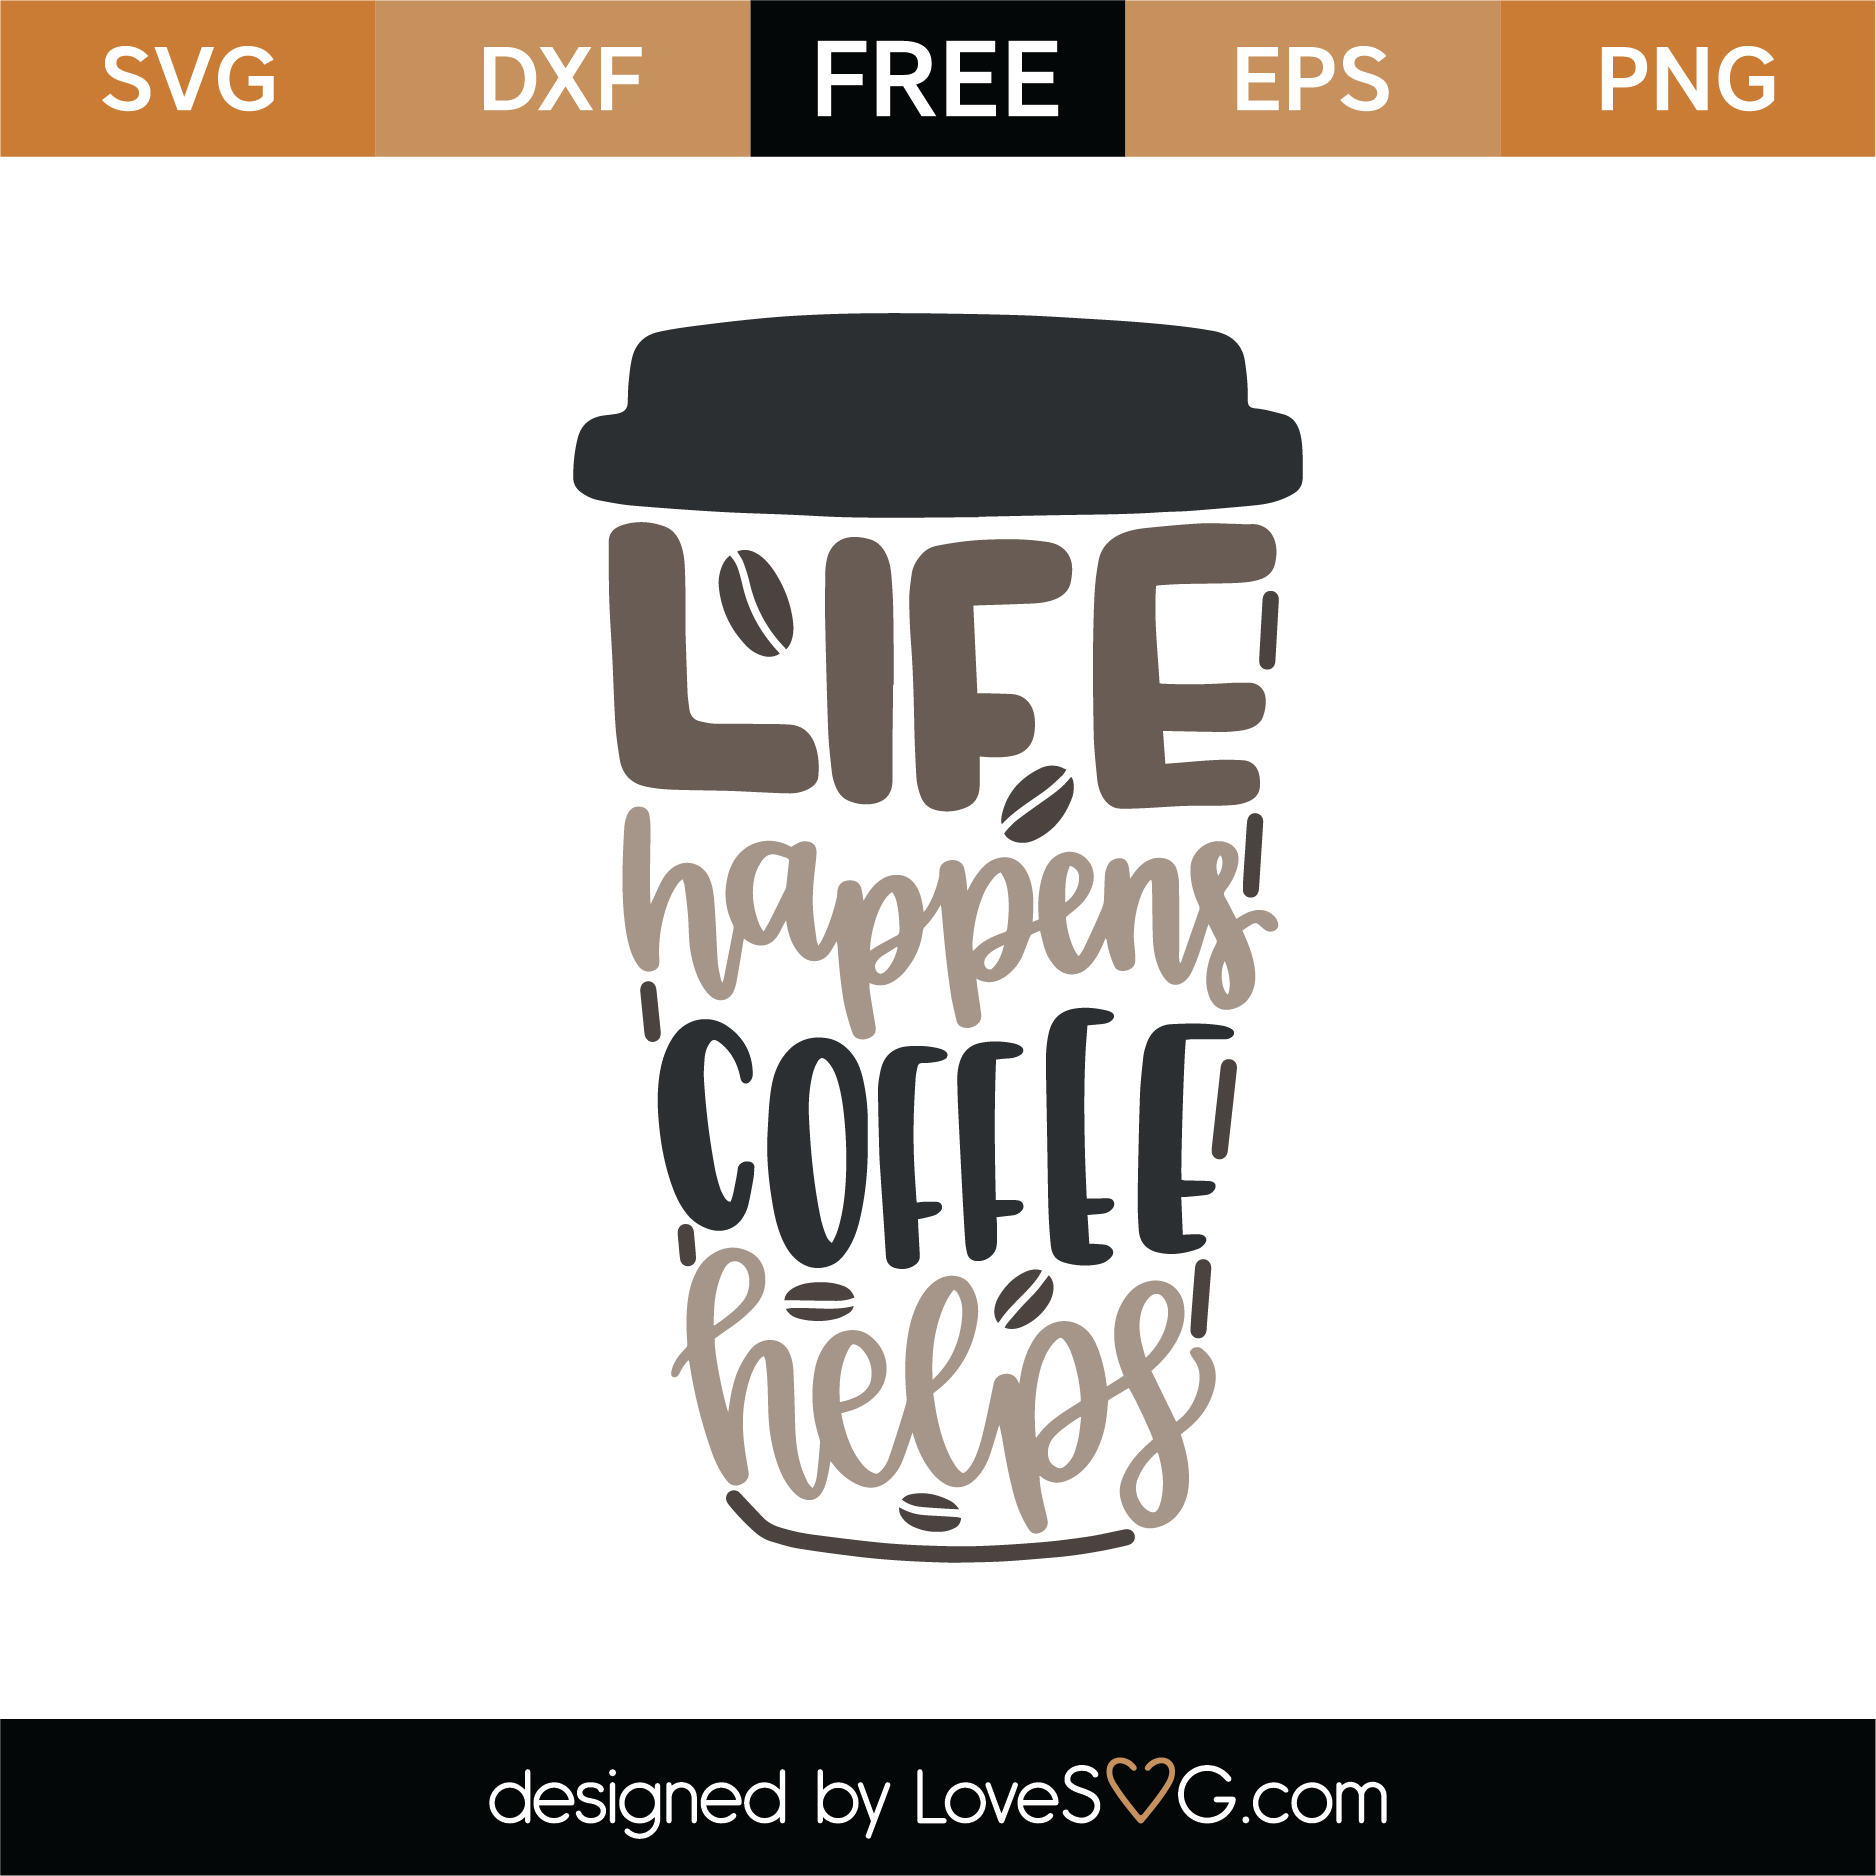 Download Free Life Happens Coffee Helps SVG Cut File | Lovesvg.com